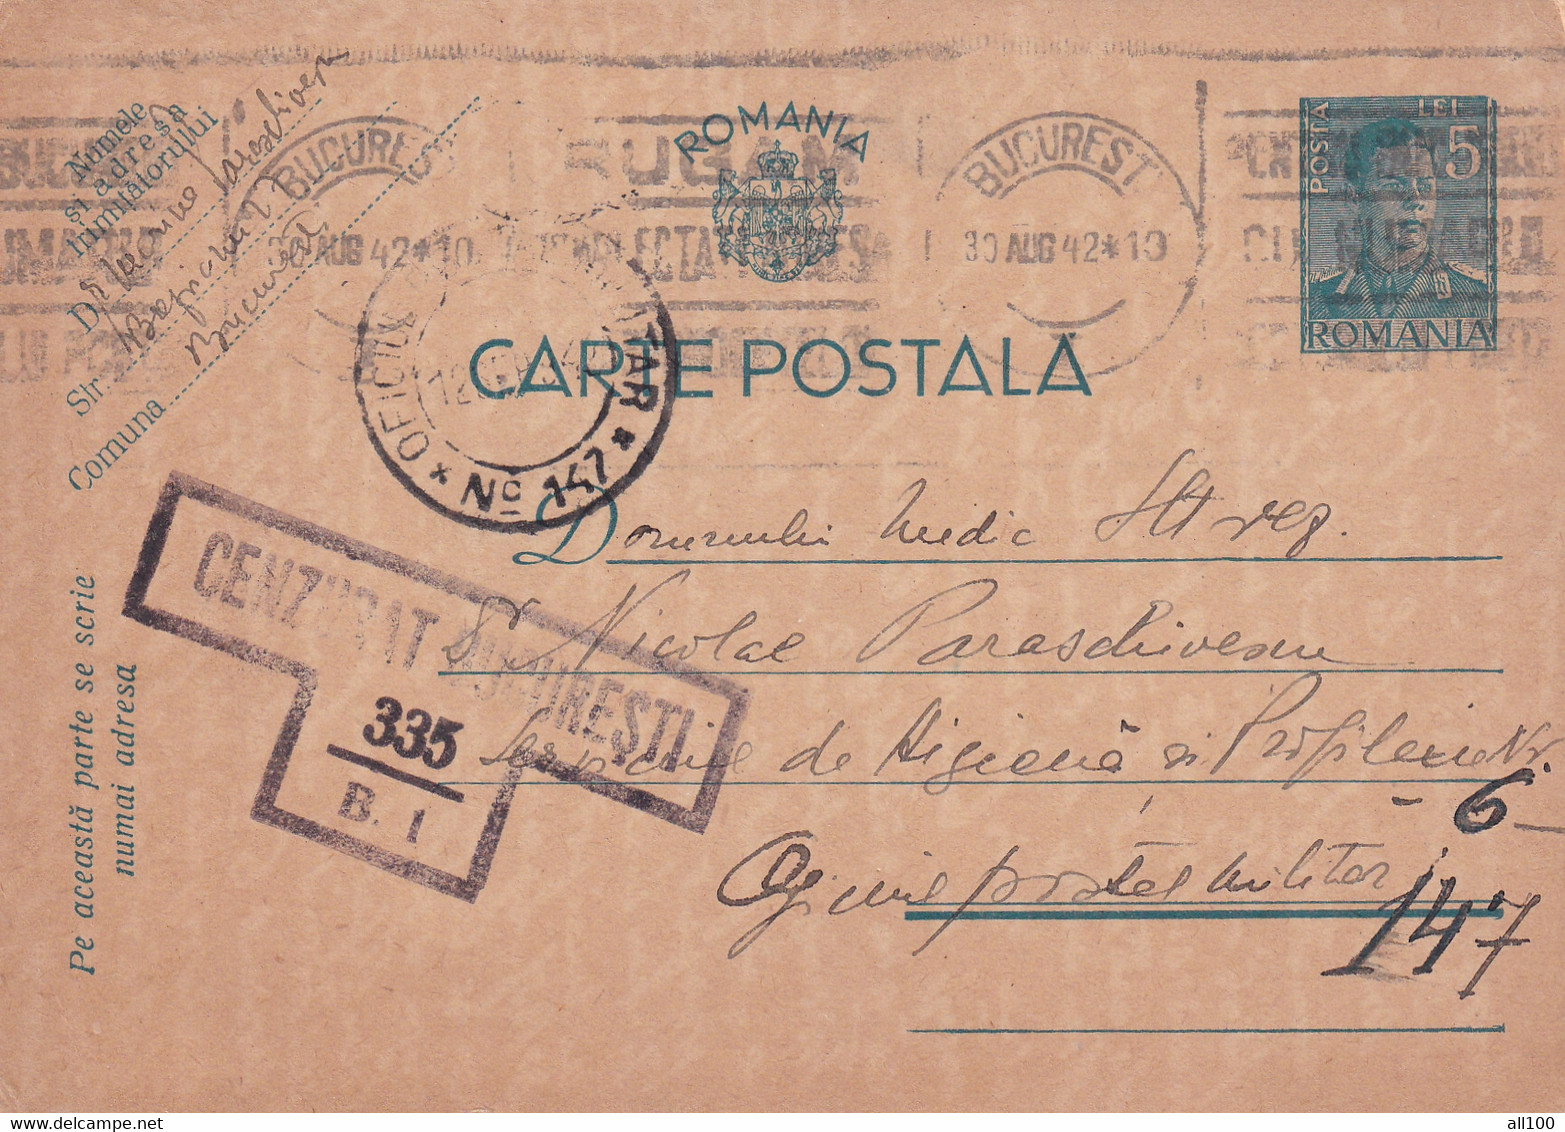 A16409 - POSTAL STATIONERY KING MICHAEL ROMANIA  CARTA POSTALA MILITARA 1943 USED  CENZORED CENZURAT BUCURESTI - Cartas De La Segunda Guerra Mundial